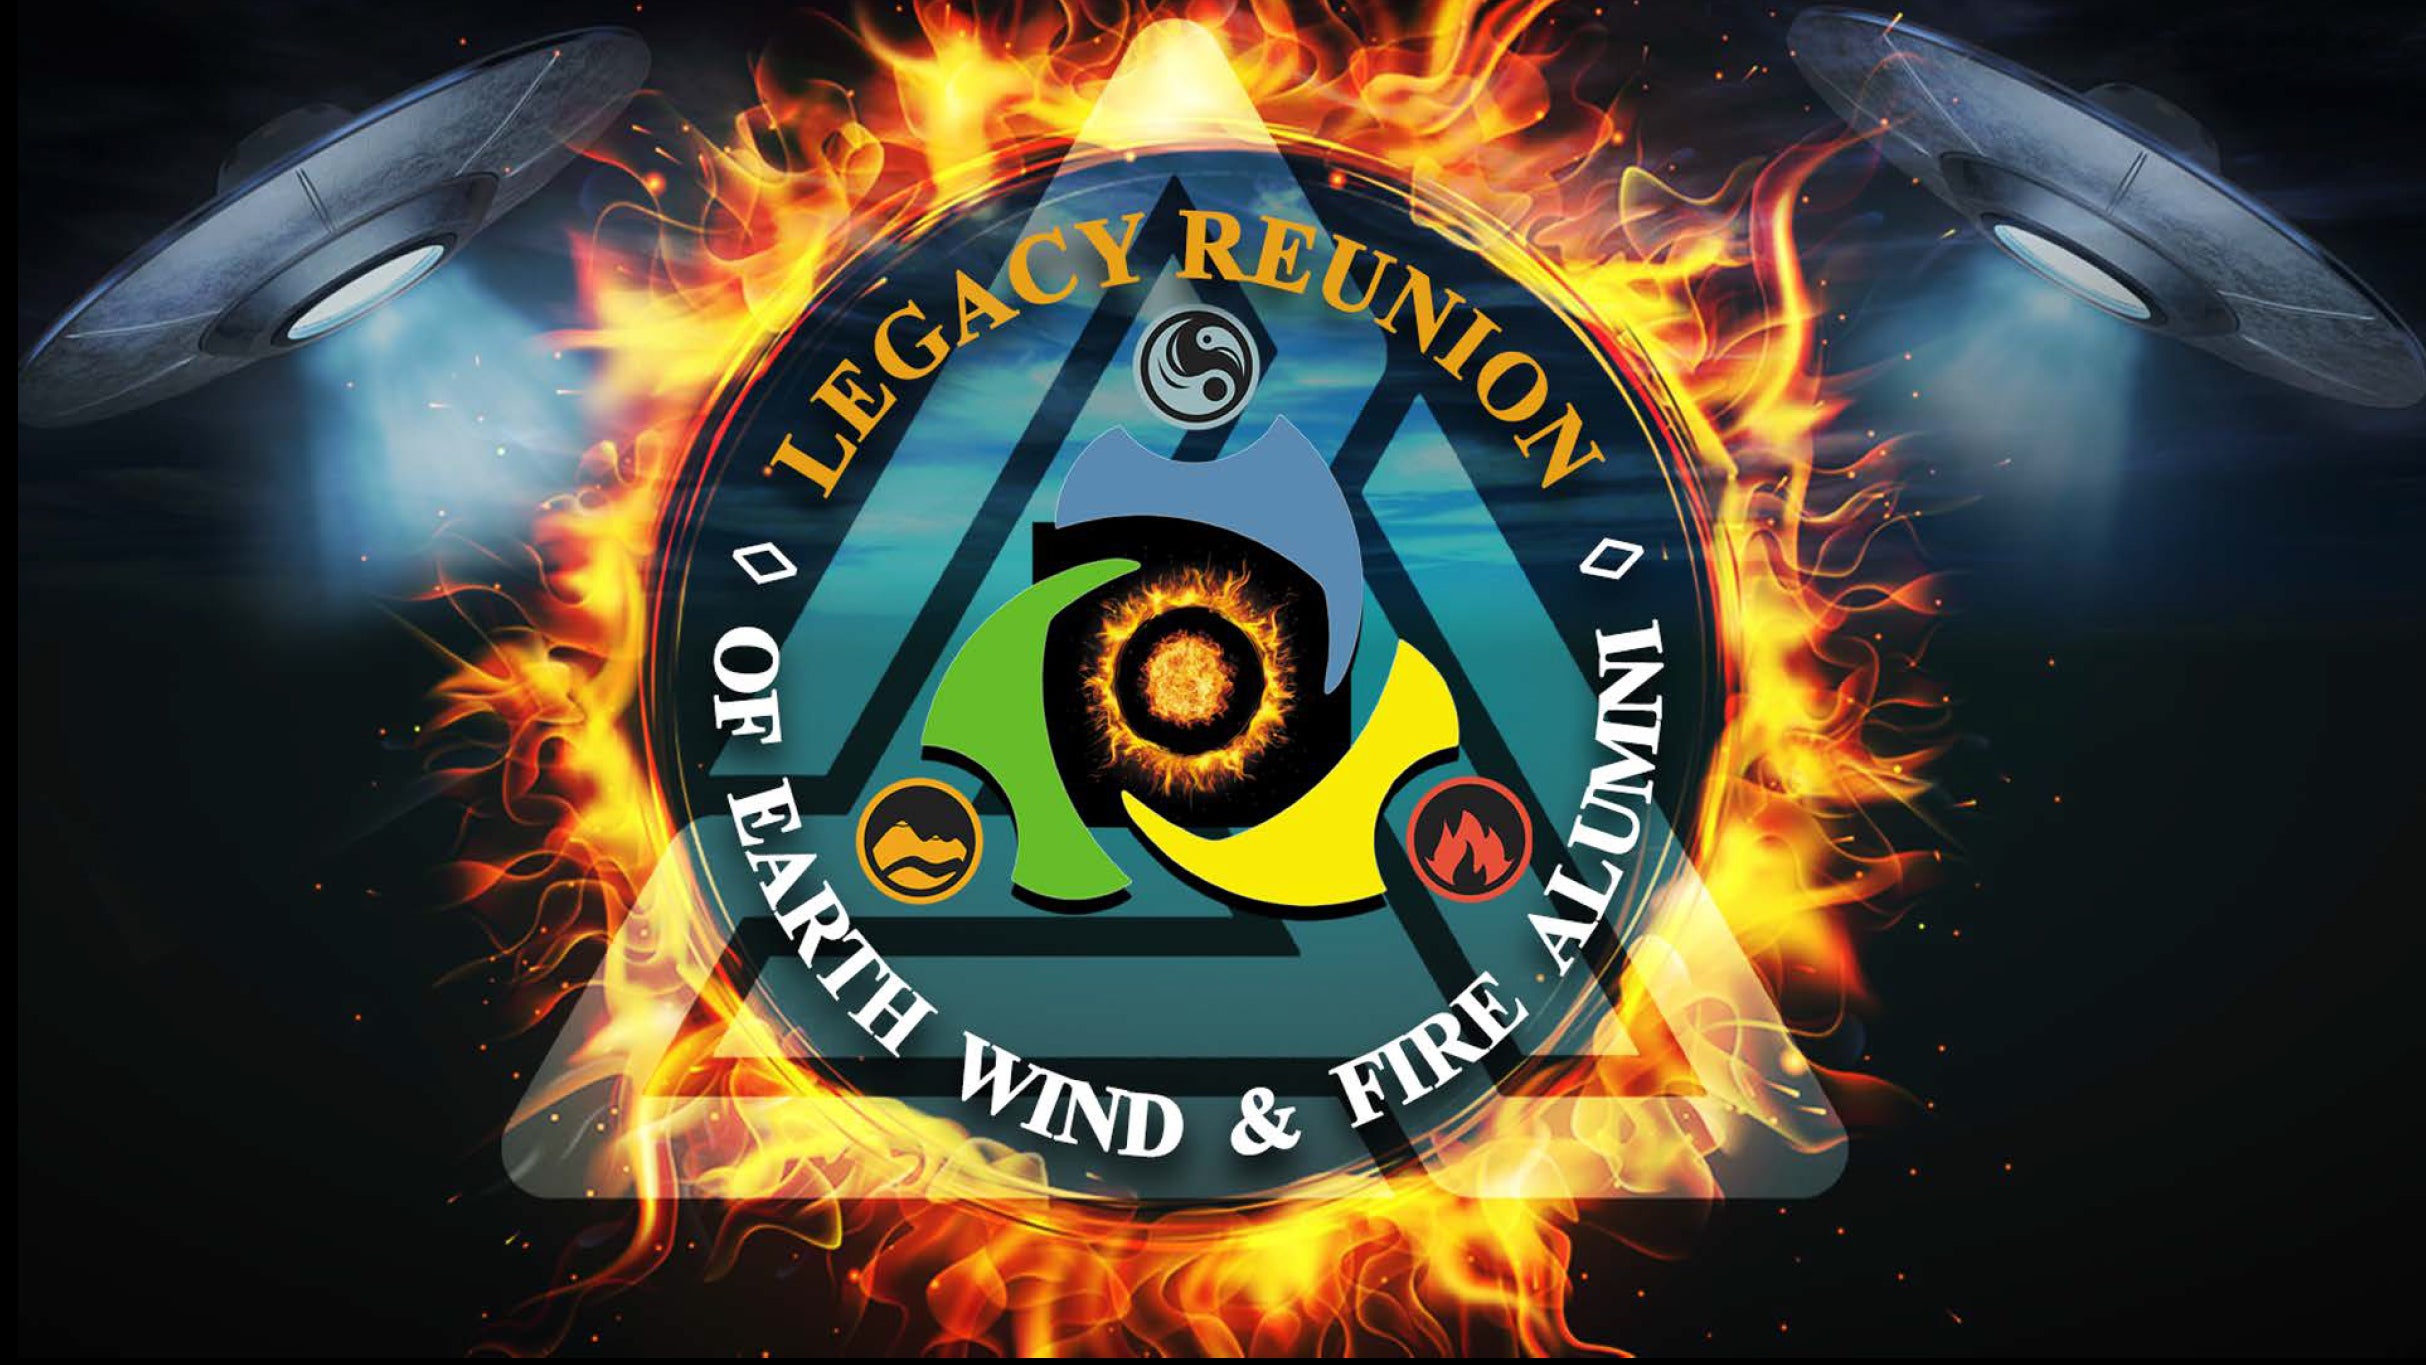 Legacy Reunion: Earth, Wind and Fire Alumni pre-sale code